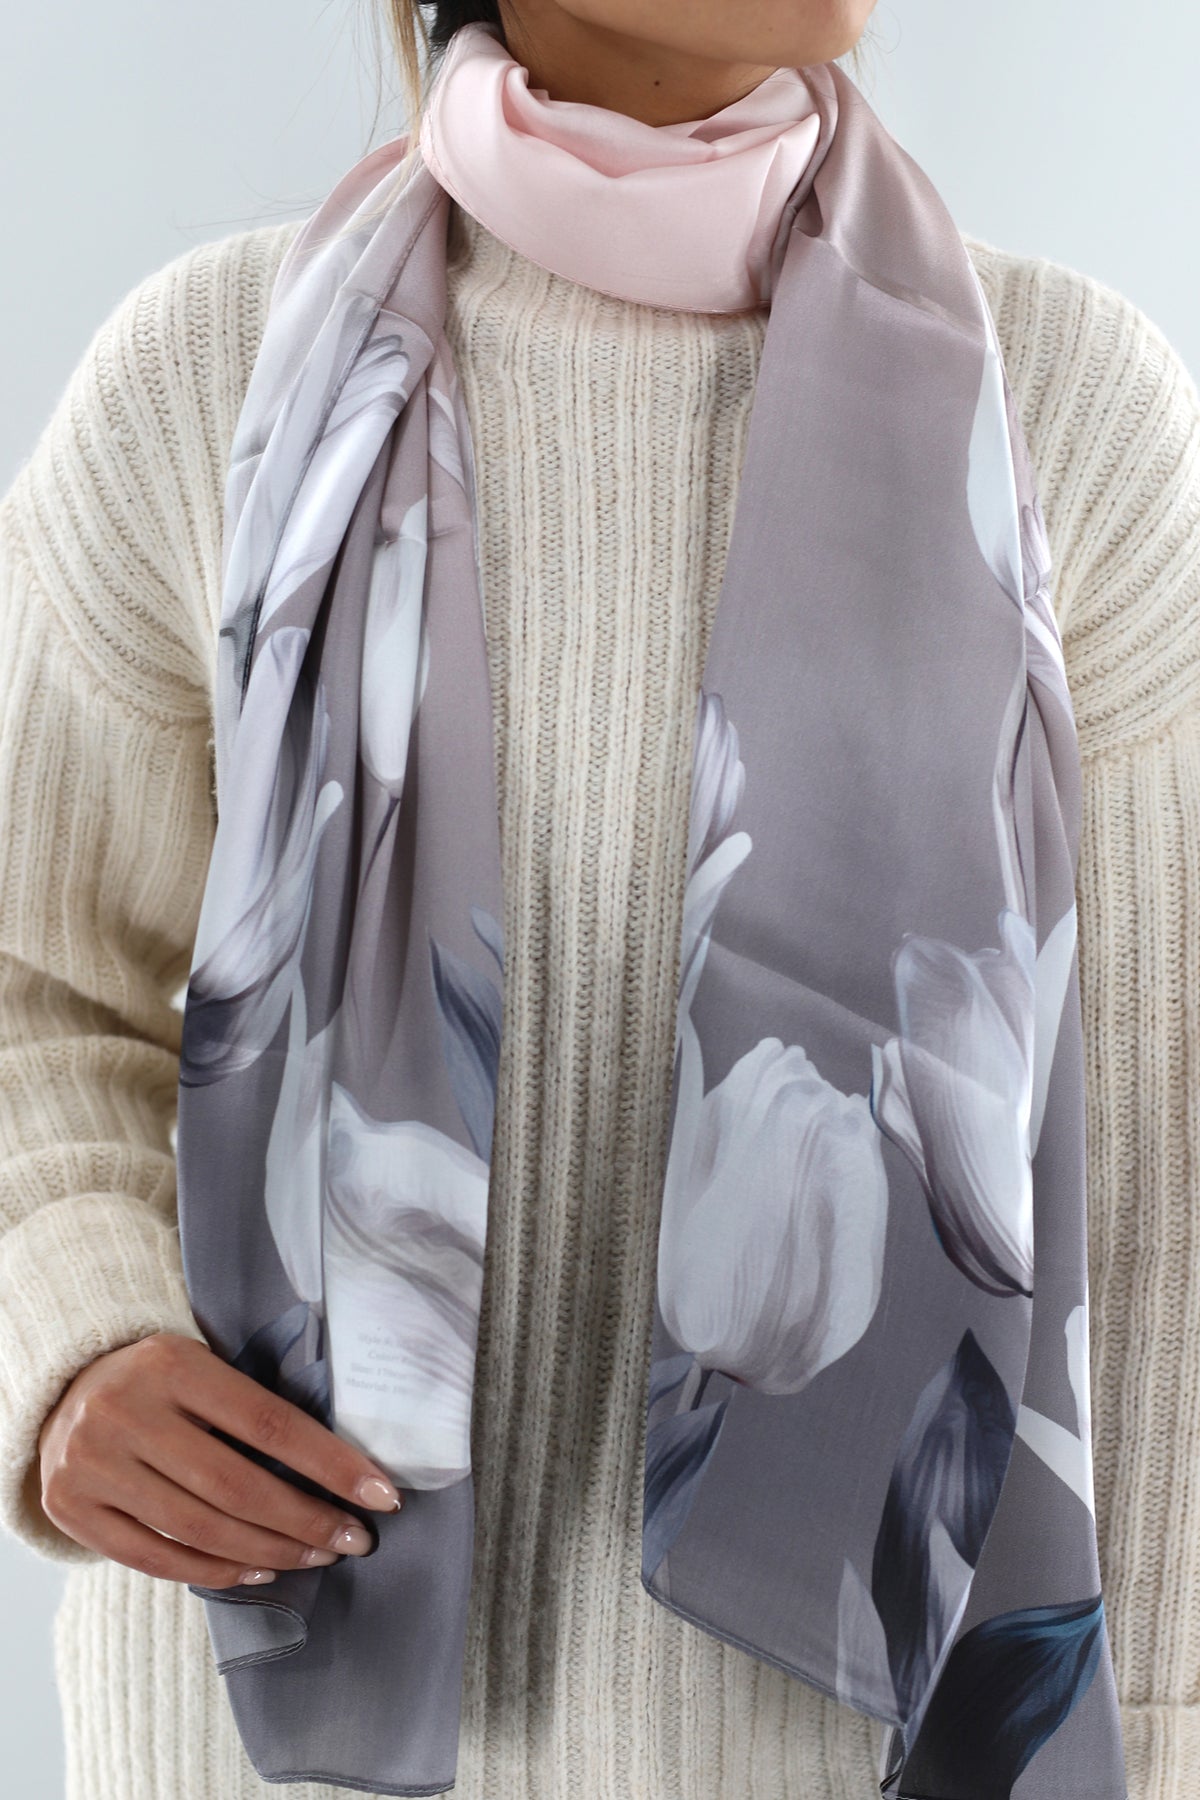 botanical print scarves & wraps